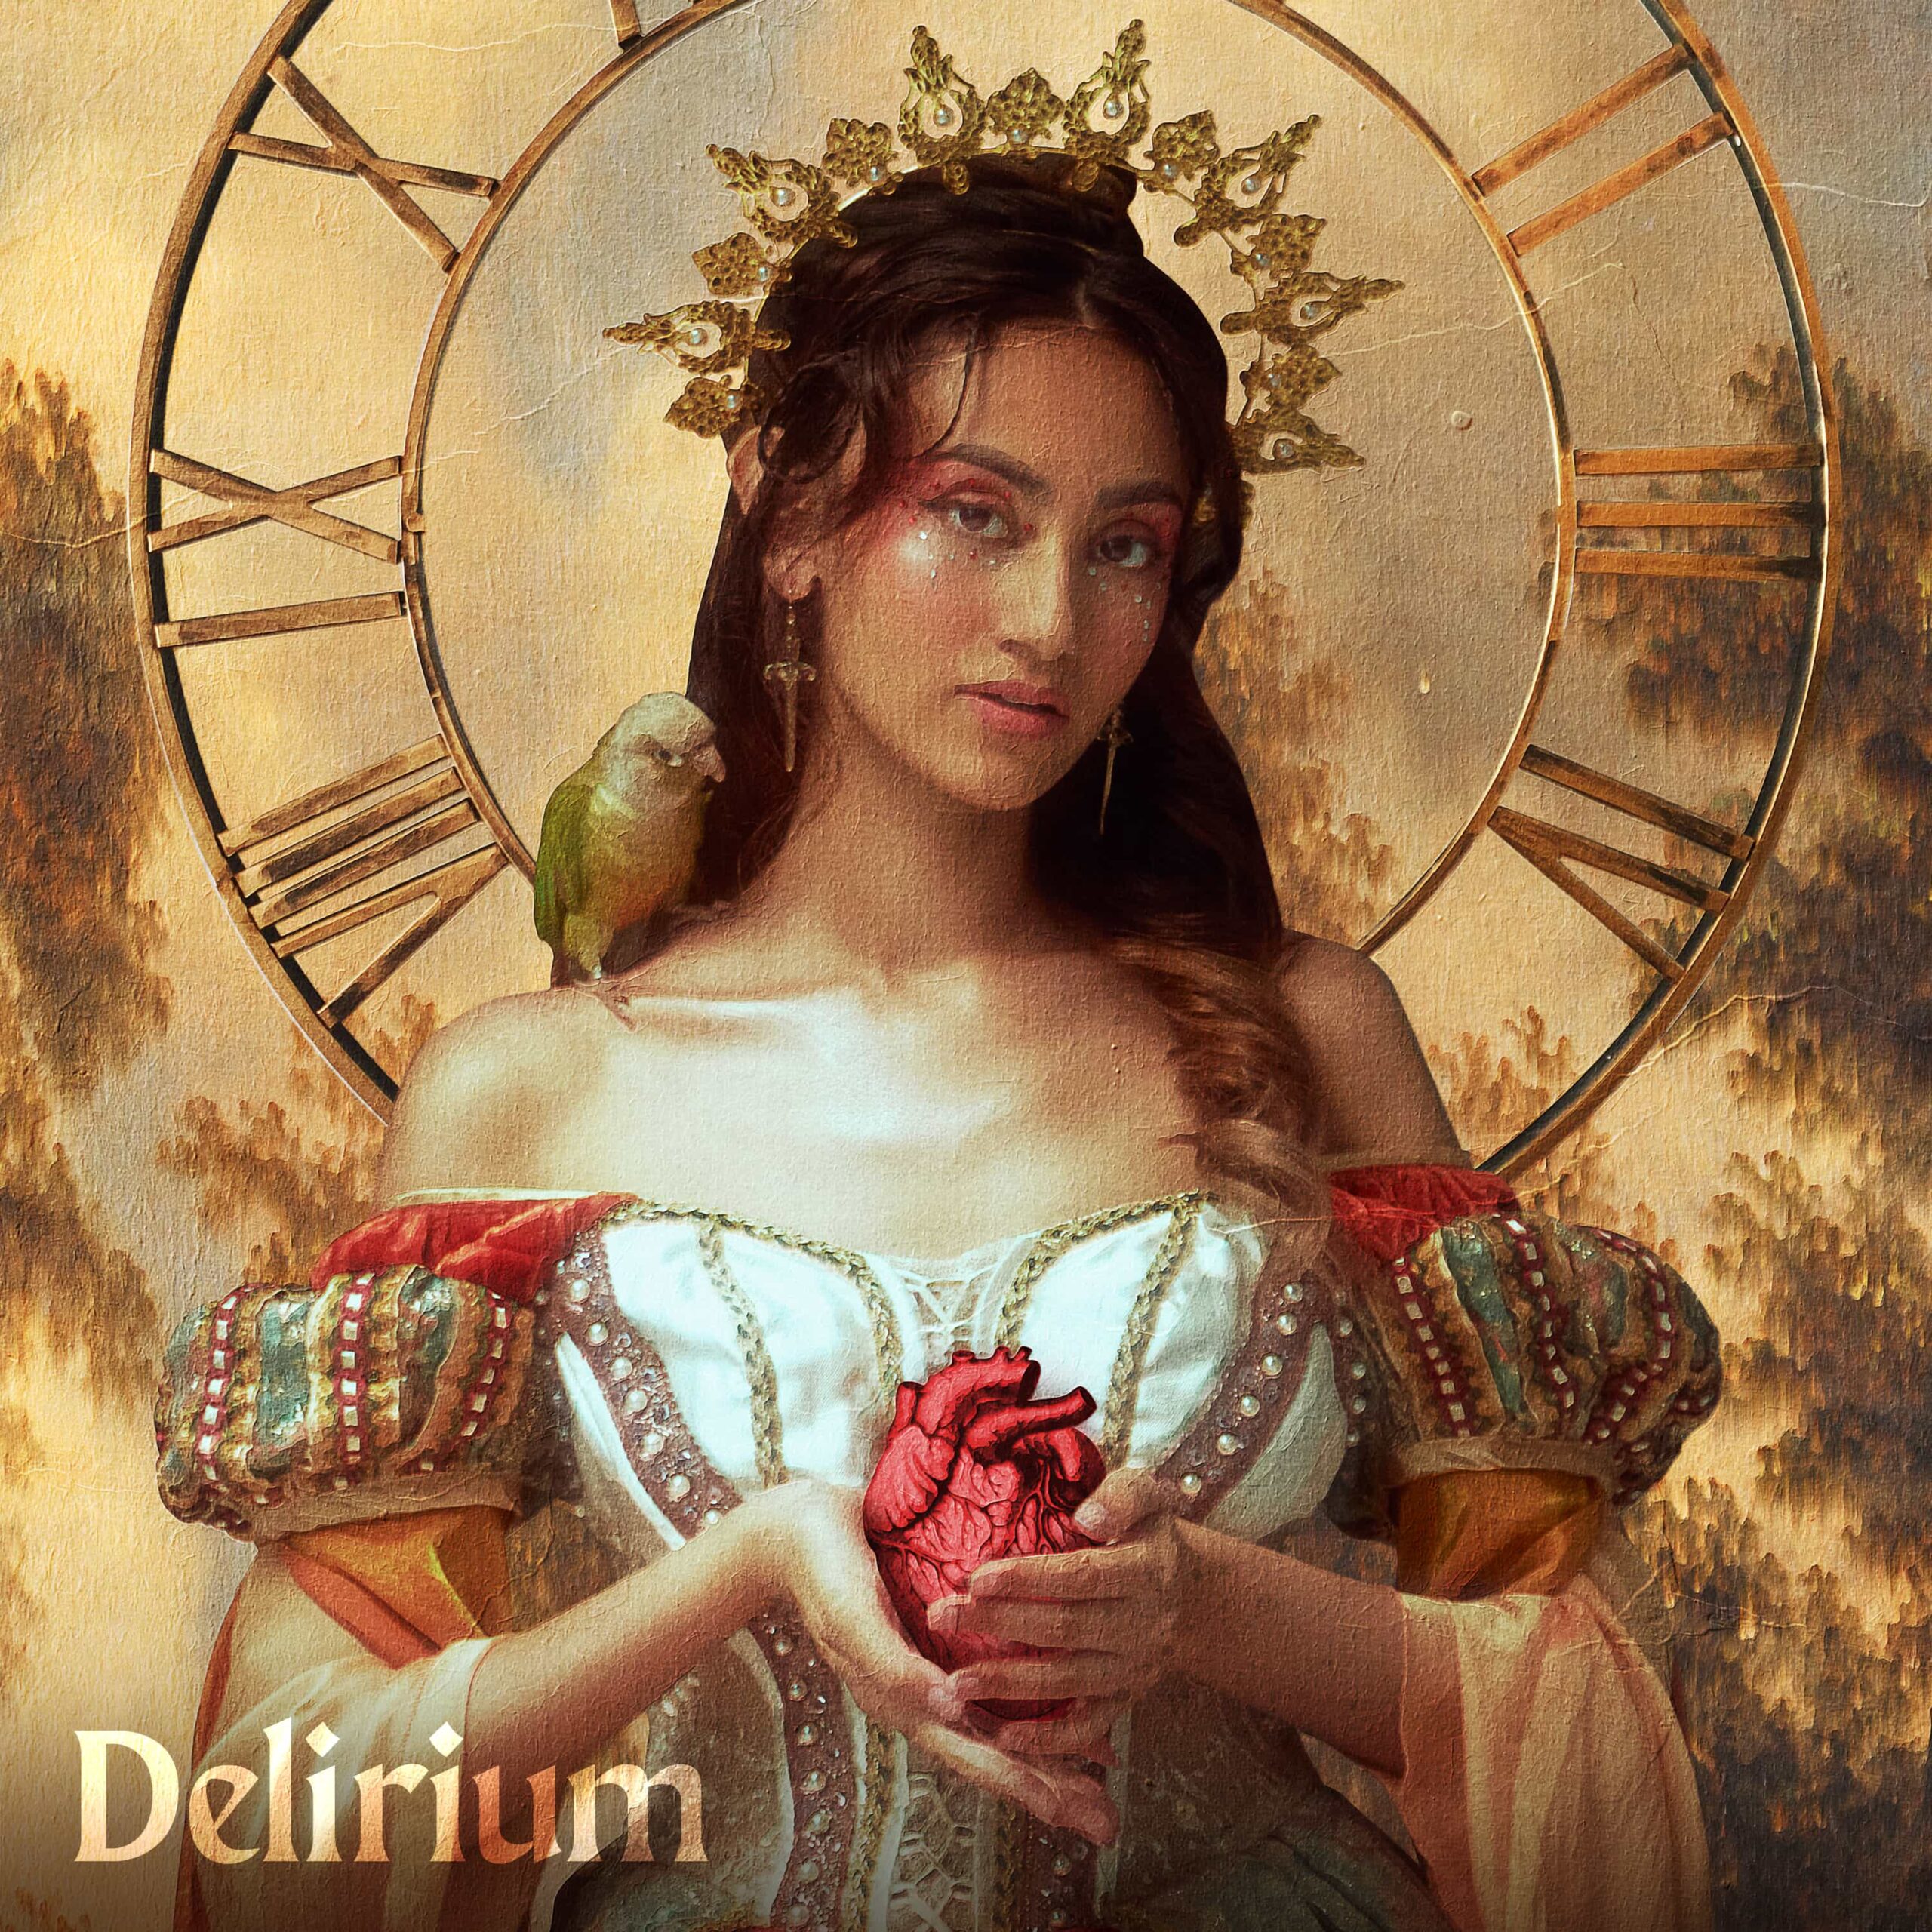 Cover art for Naomi G's single, Delirium